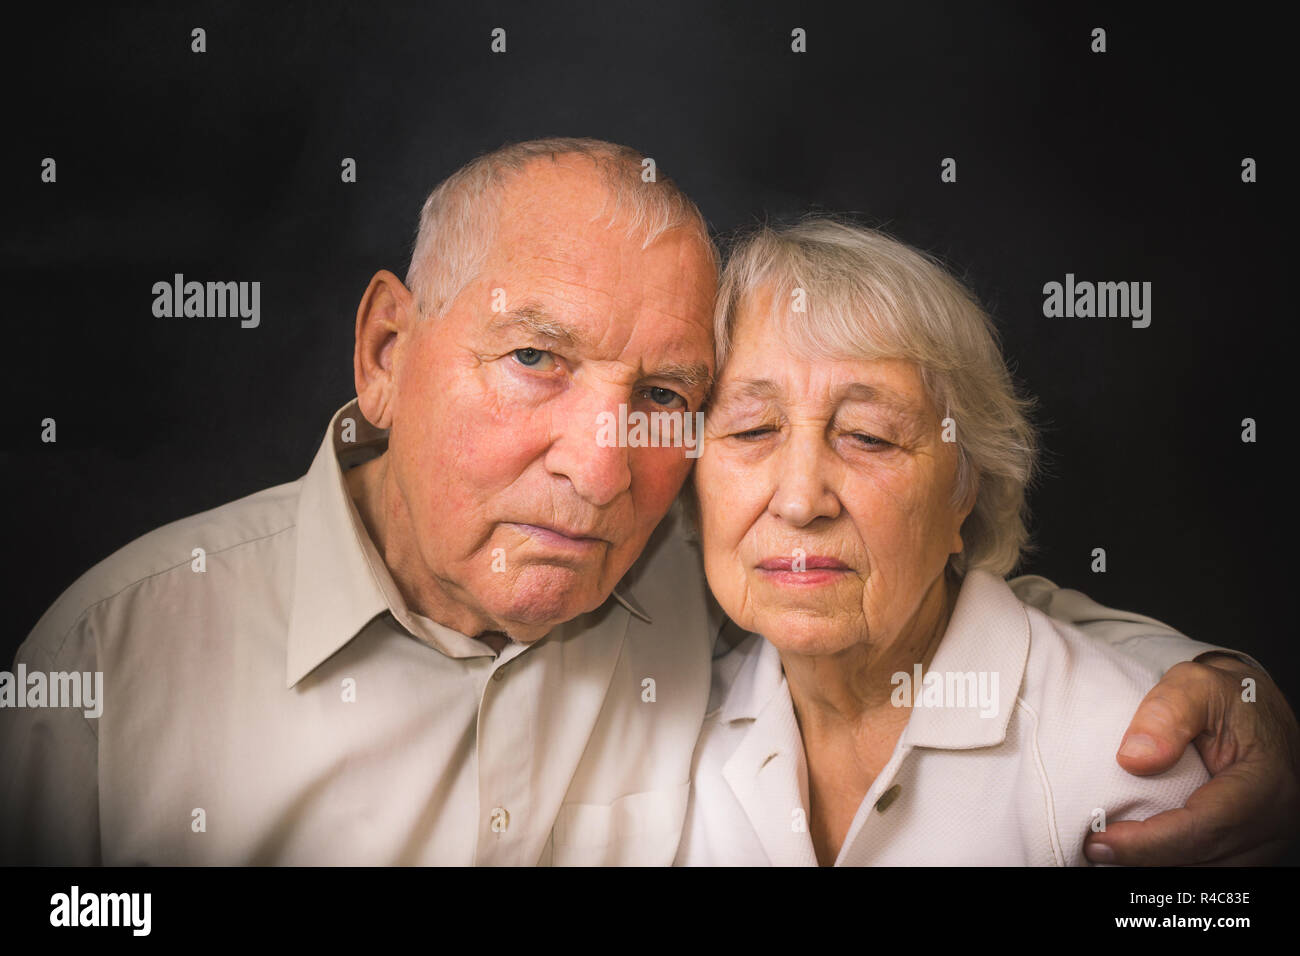 Sad elderly couple on a black background Stock Photo